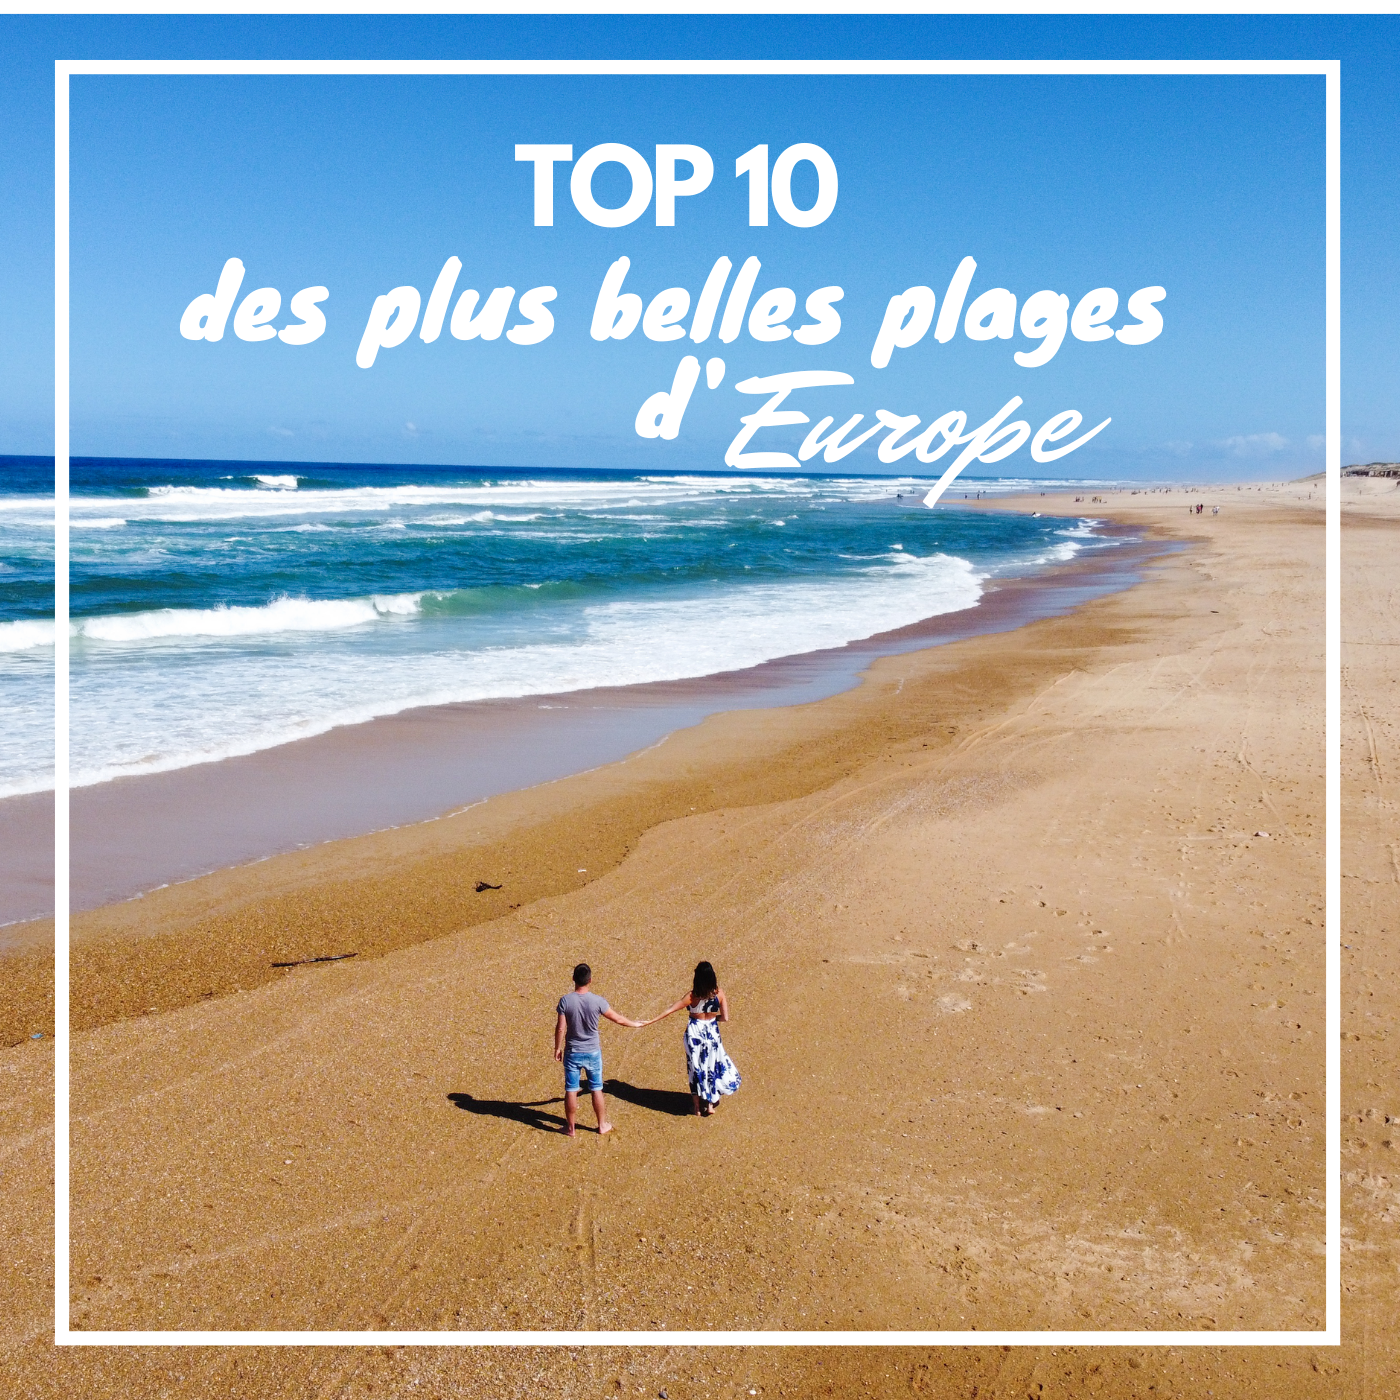 You are currently viewing Top 10 des plus belles plages d’Europe : notre conseil!